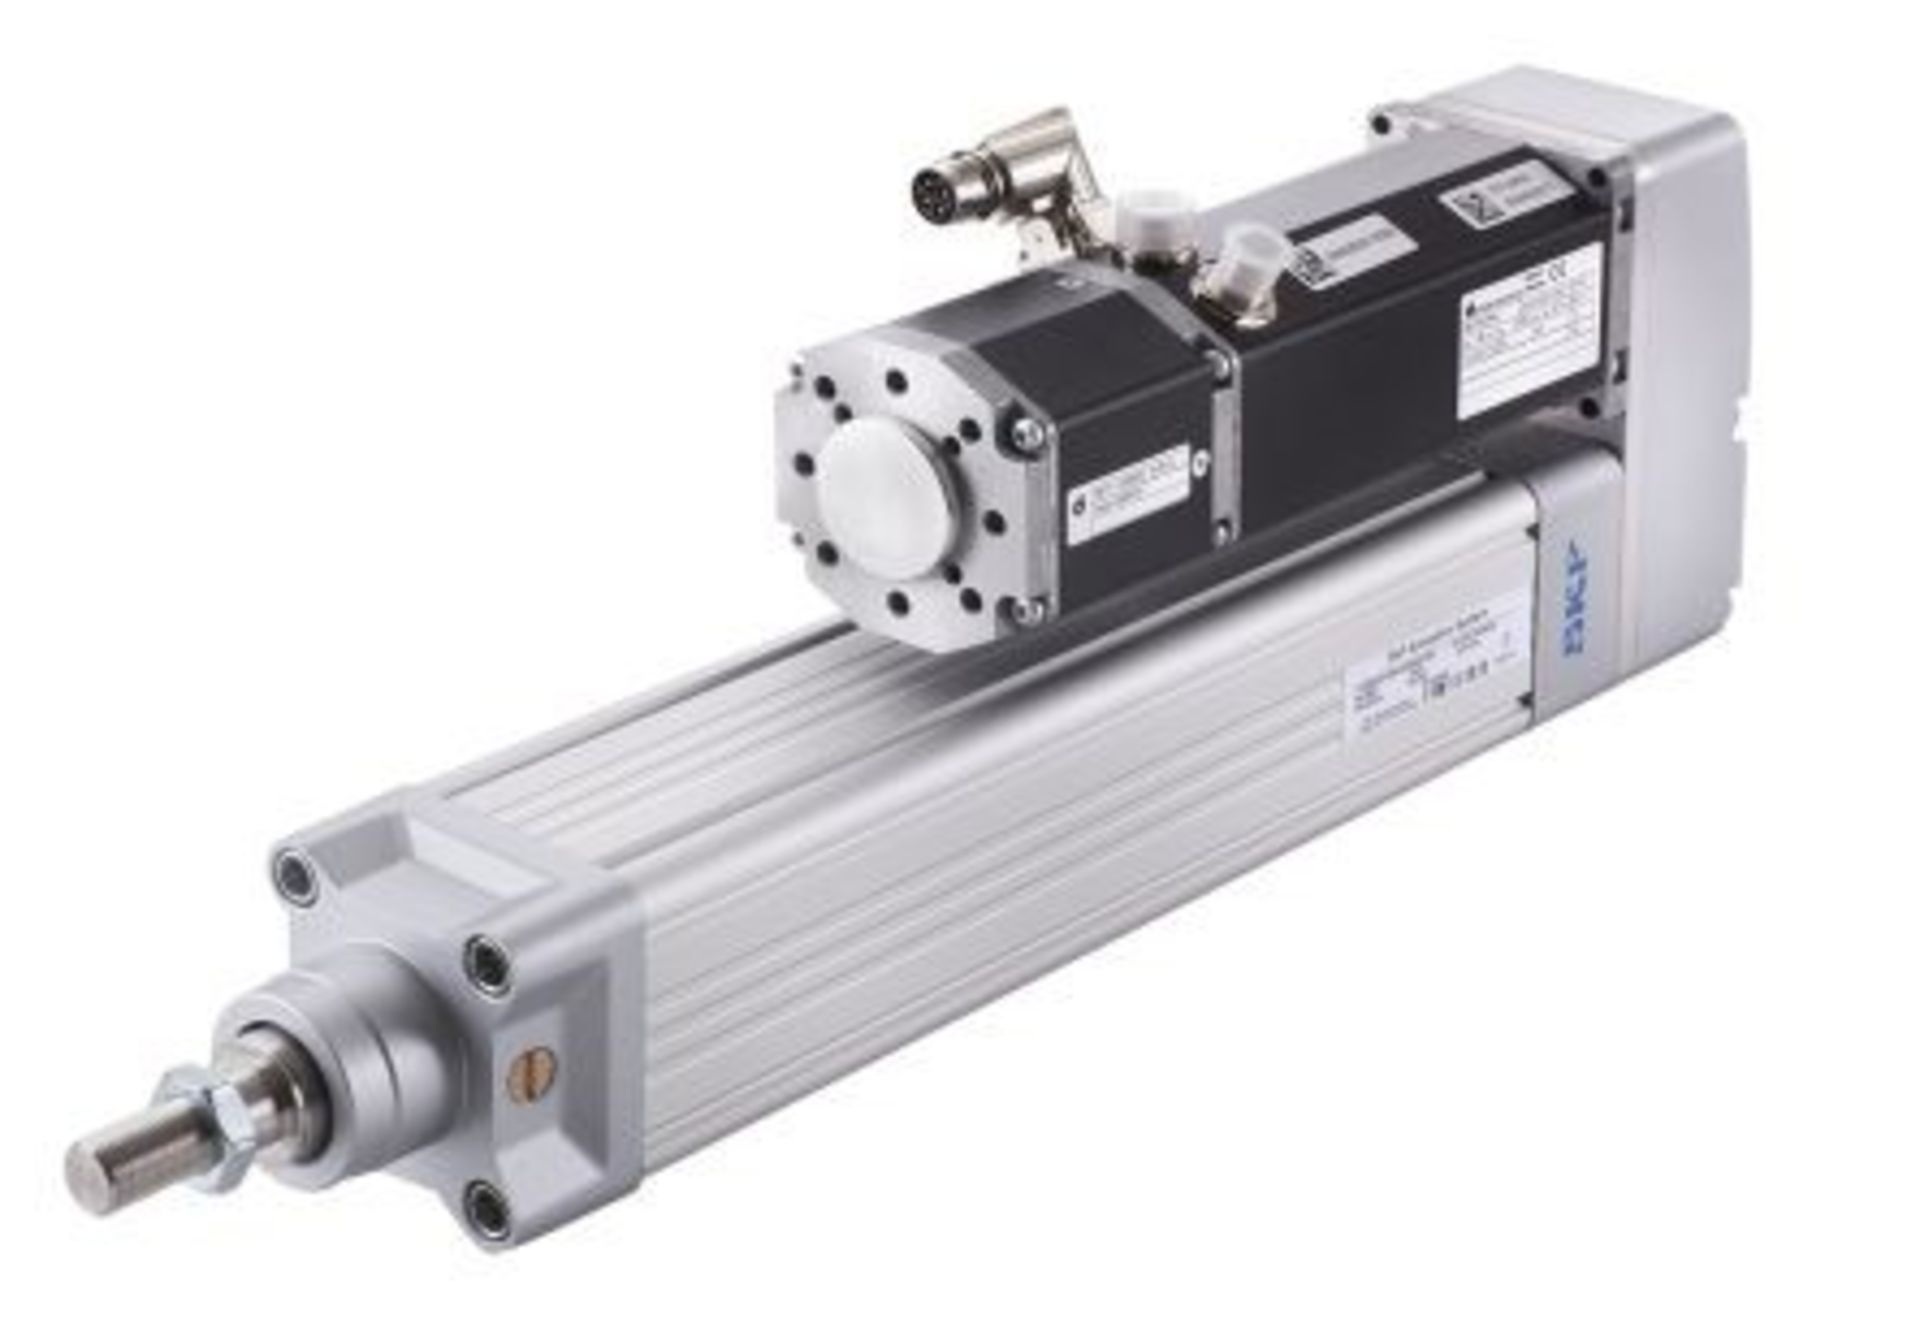 SKF Linear Actuator CASM-32 Series, 300mm stroke - MAR 8802093